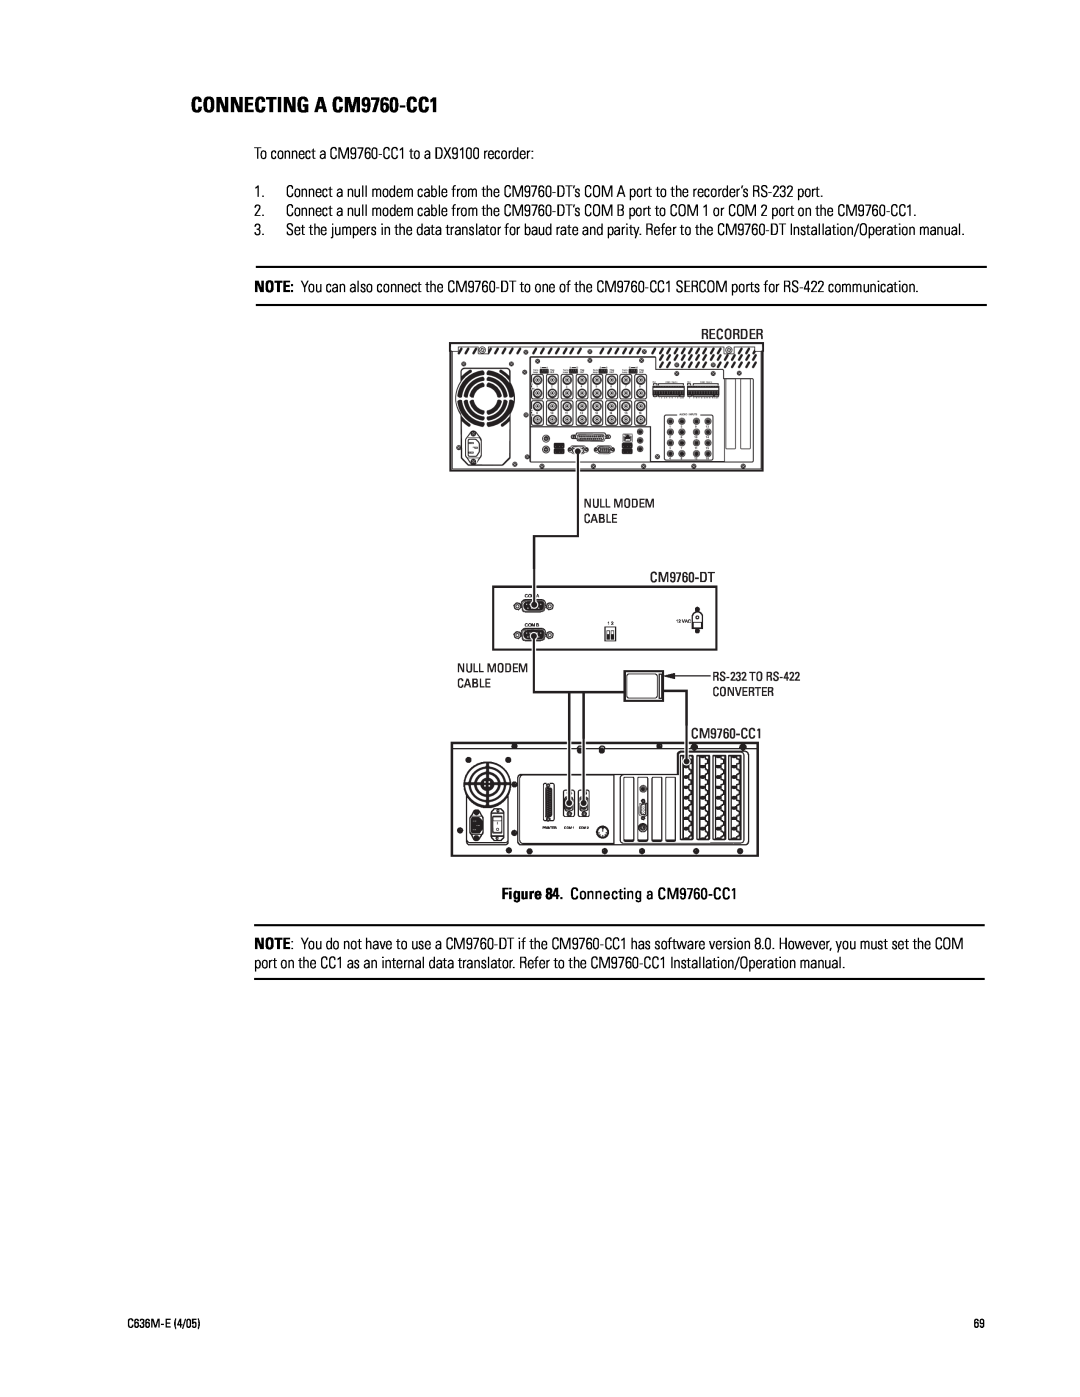 Pelco installation manual CONNECTING A CM9760-CC1, To connect a CM9760-CC1 to a DX9100 recorder, Recorder, CM9760-DT 